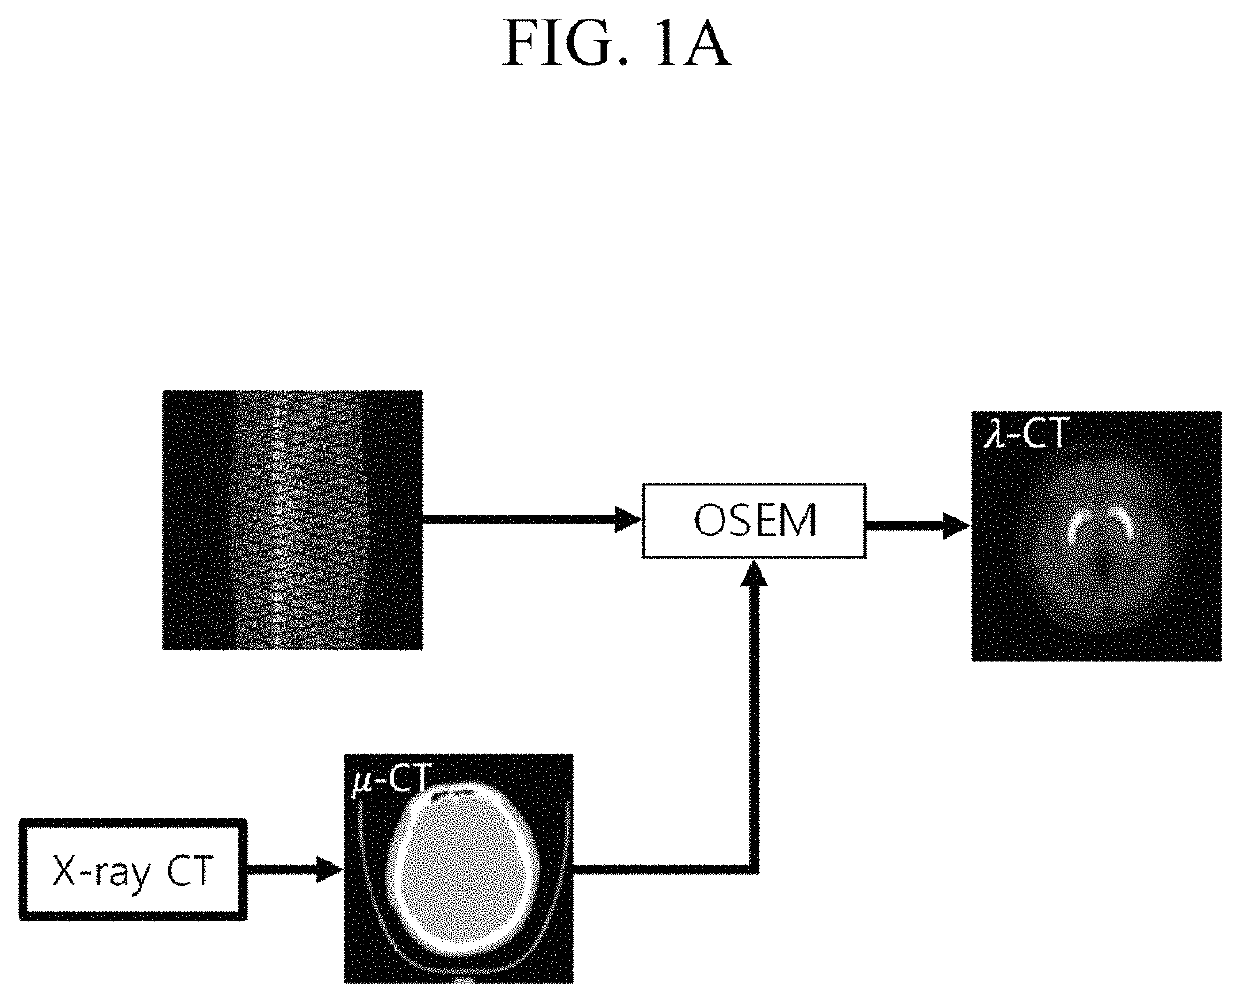 Positron emission tomography system and image reconstruction method using the same